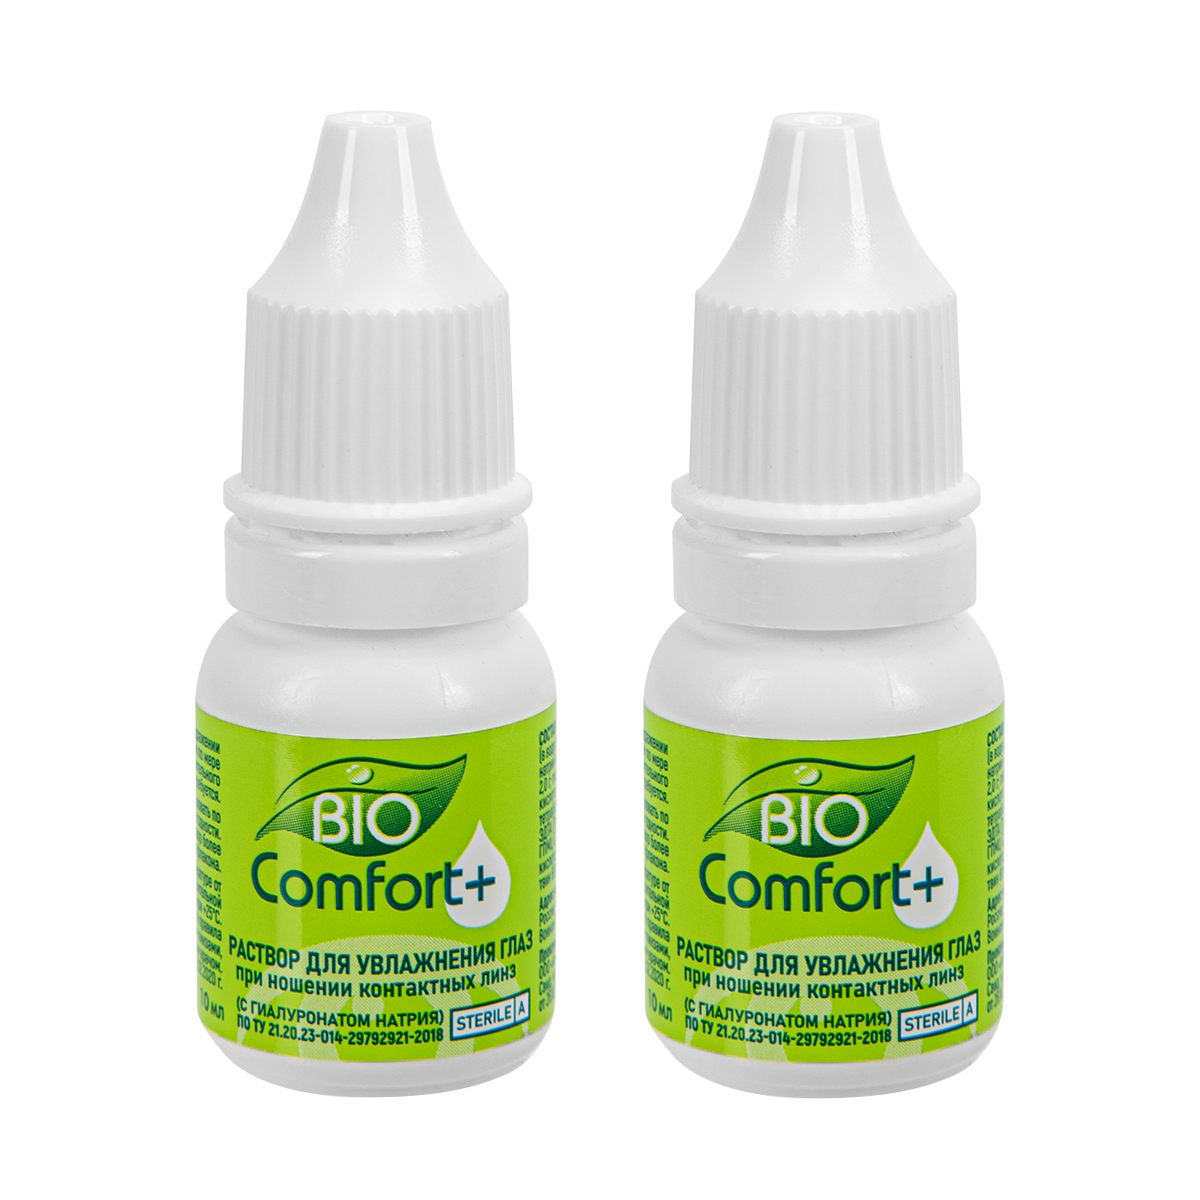 Капли BioComfort (2 шт.), Изделия медицинского назначения, Оптика